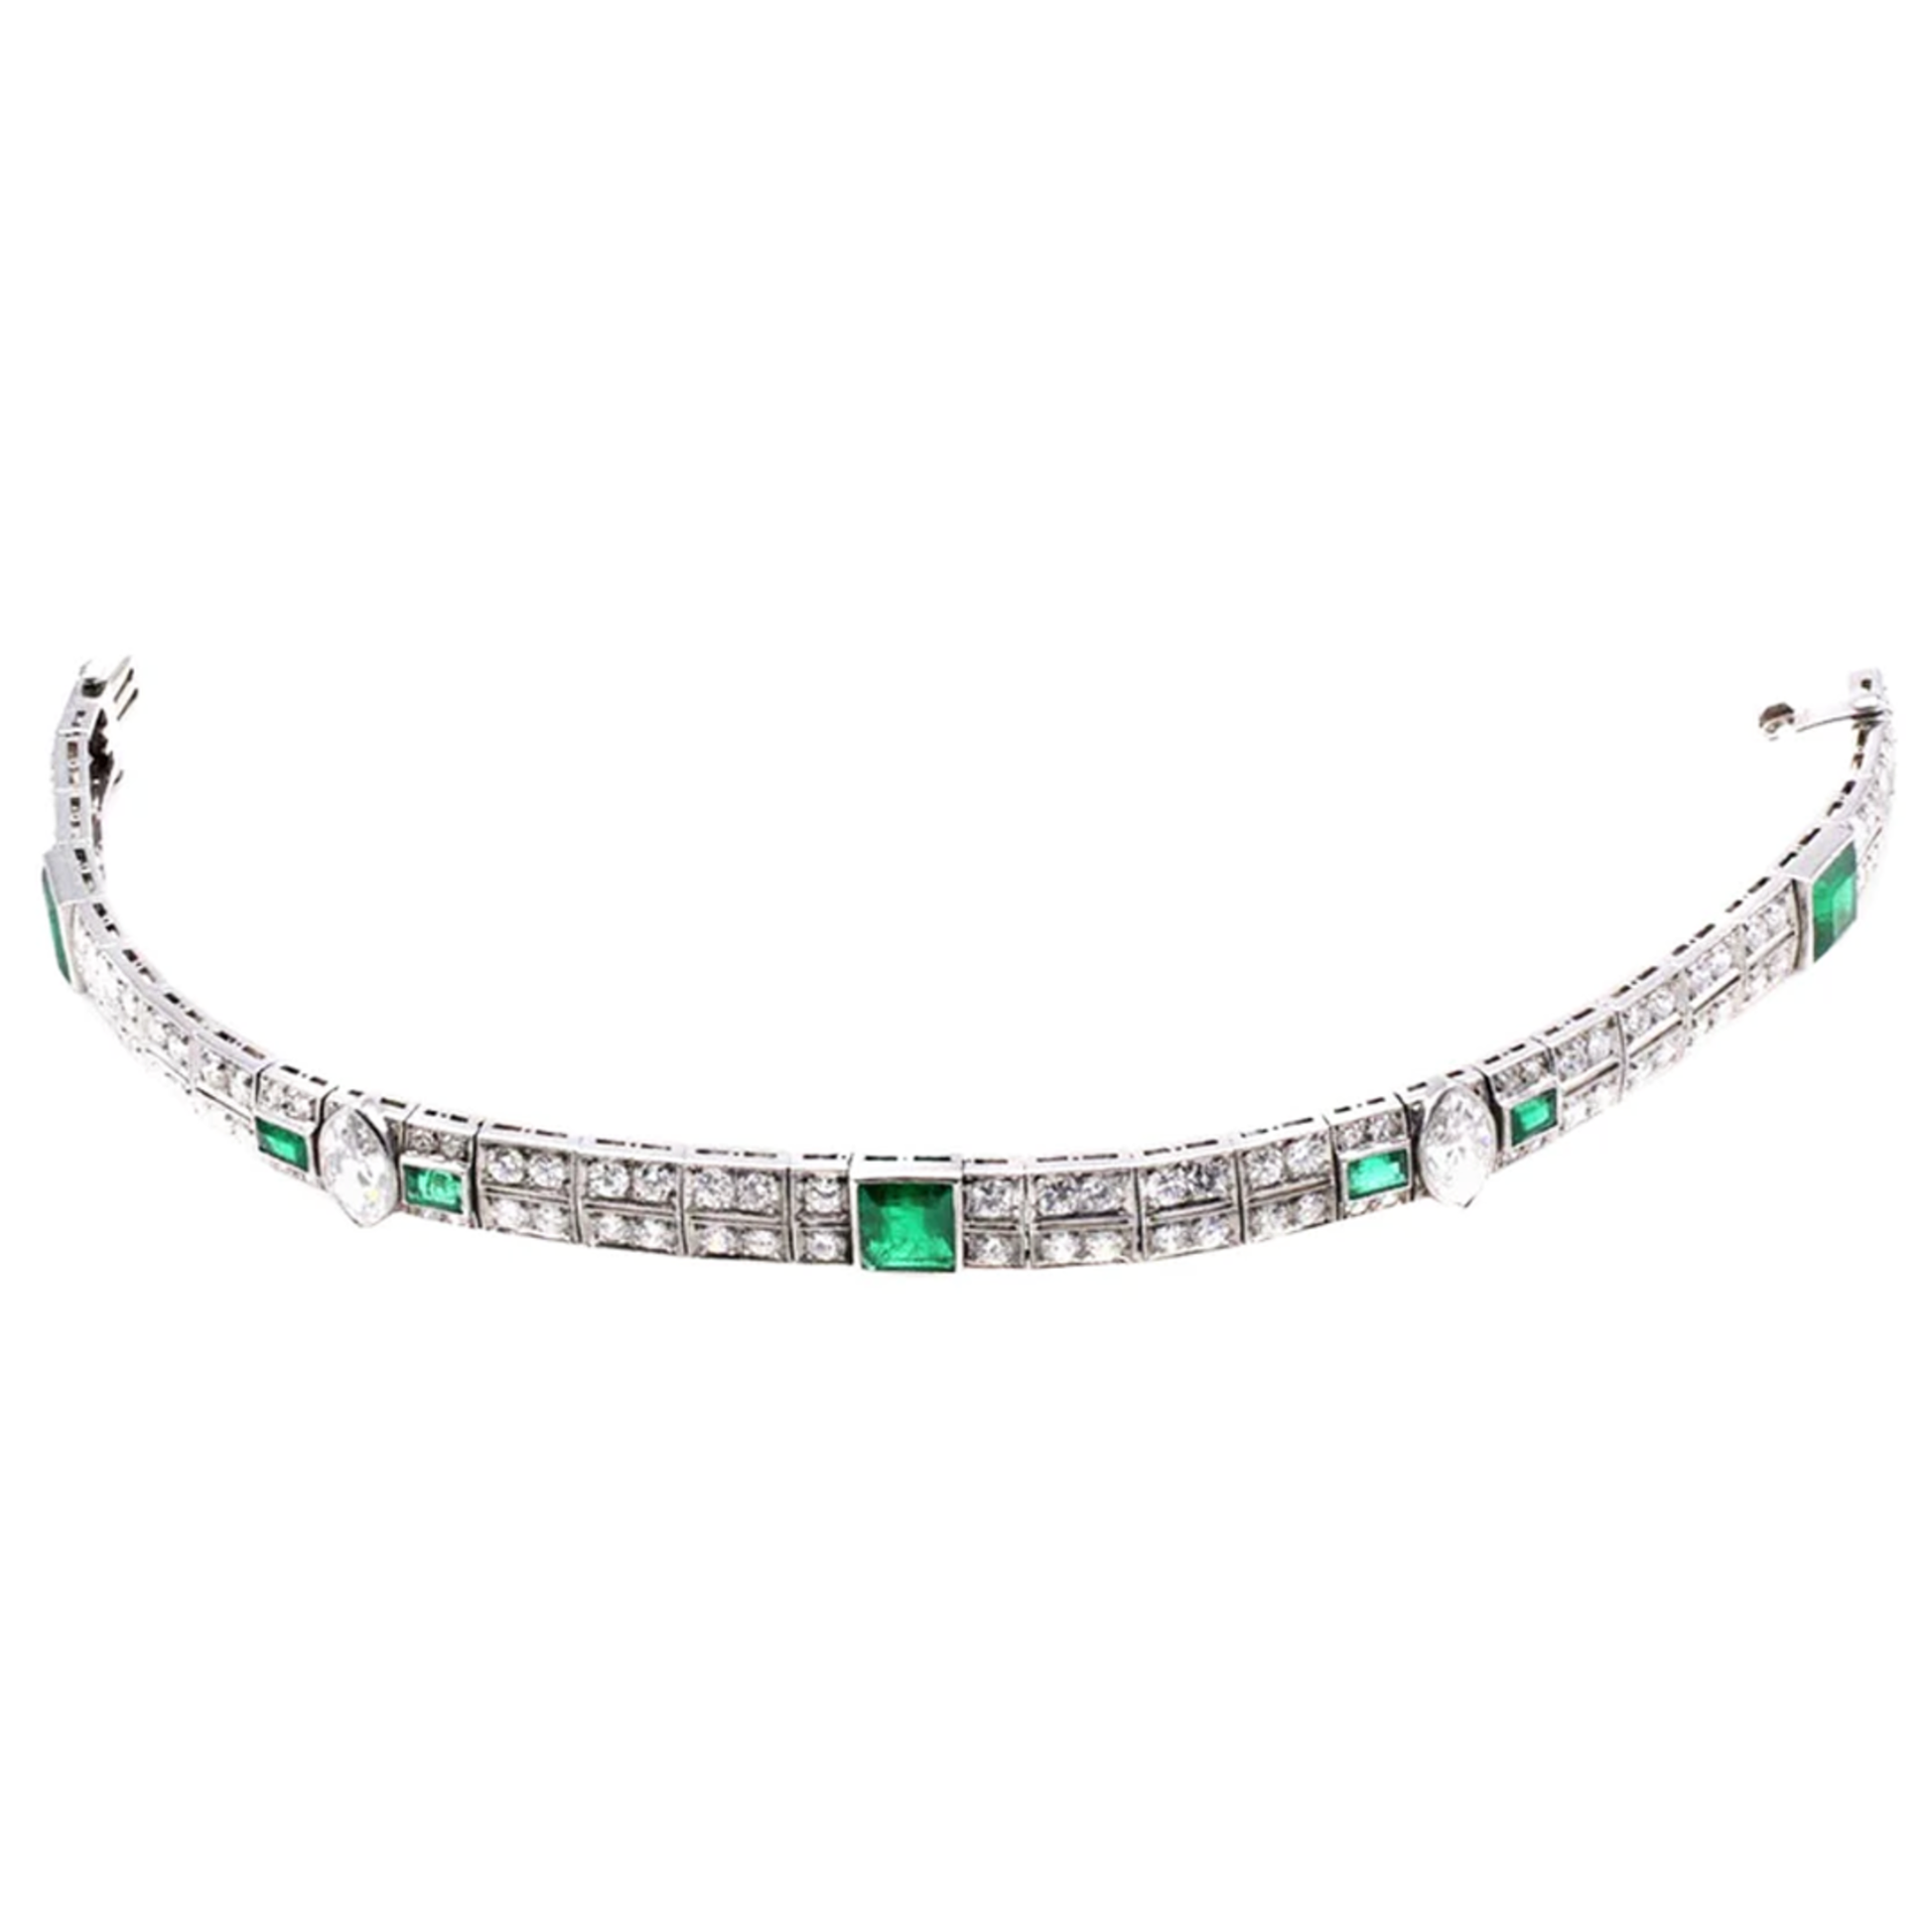 Cartier Art Deco Platinum Diamond & Emerald Bracelet front